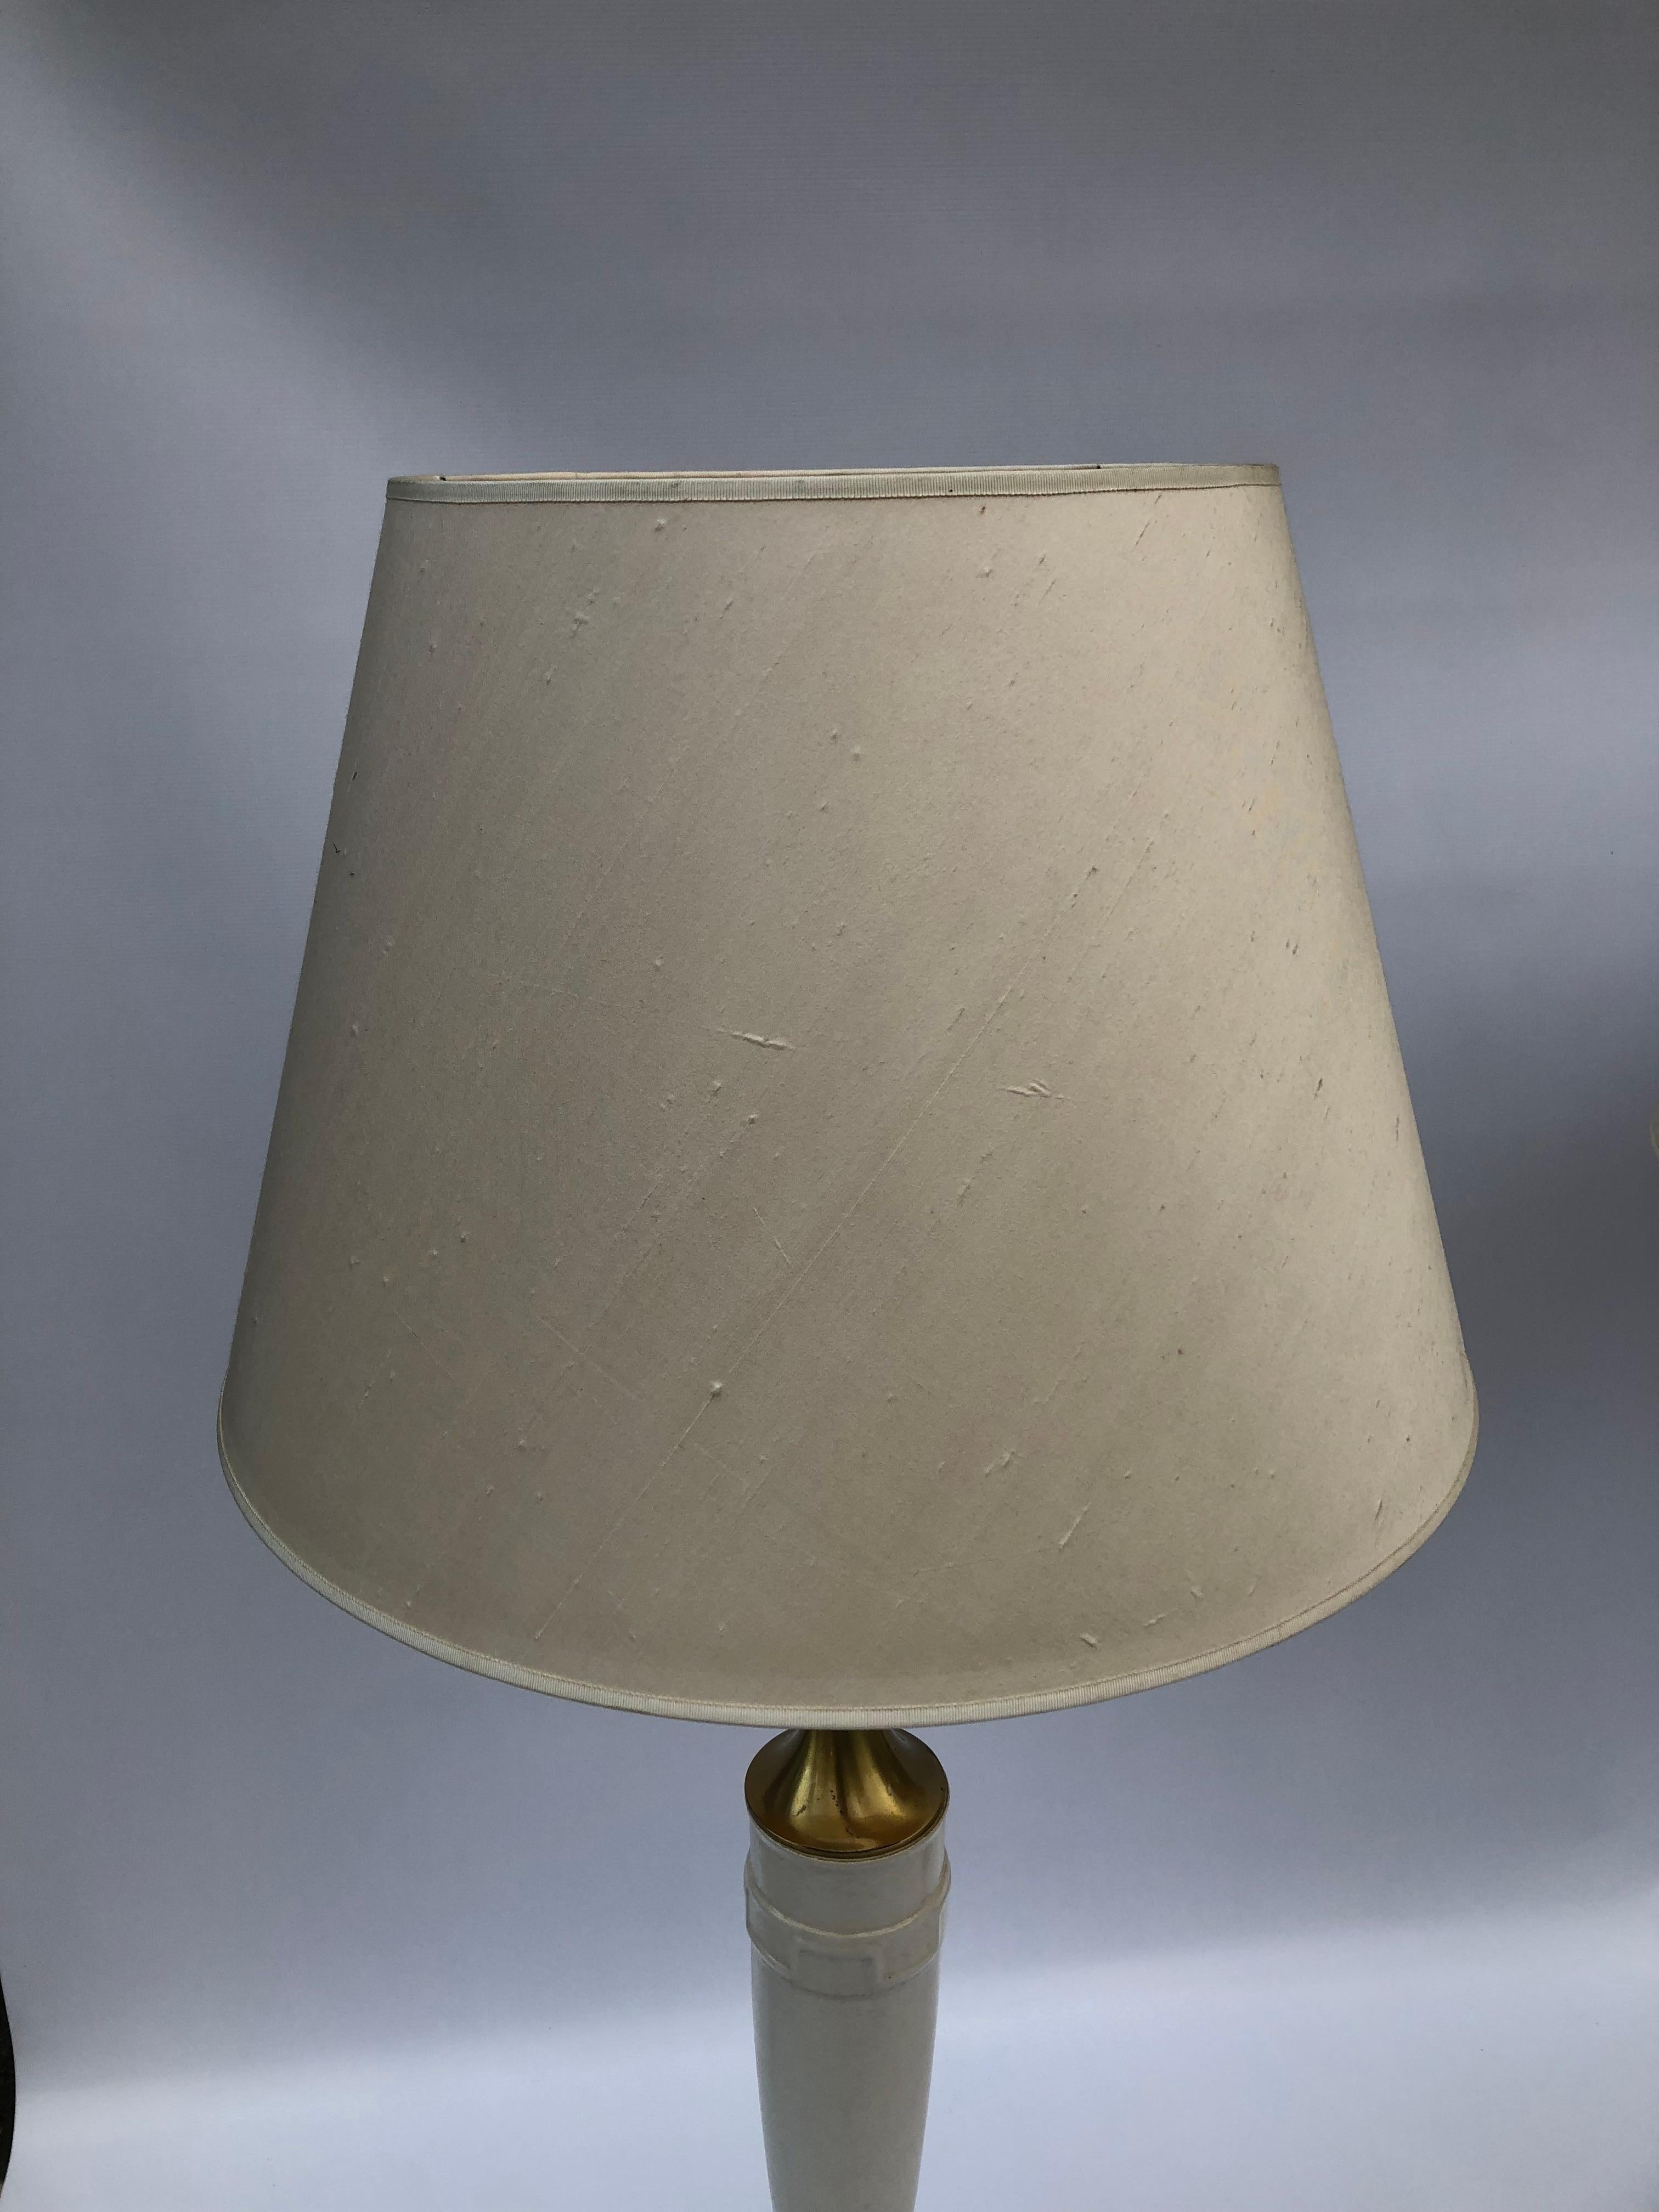 Laurel Greek Key Ceramic Brass Table Lamps 1970s Hollywood Regency Neoclassical For Sale 9